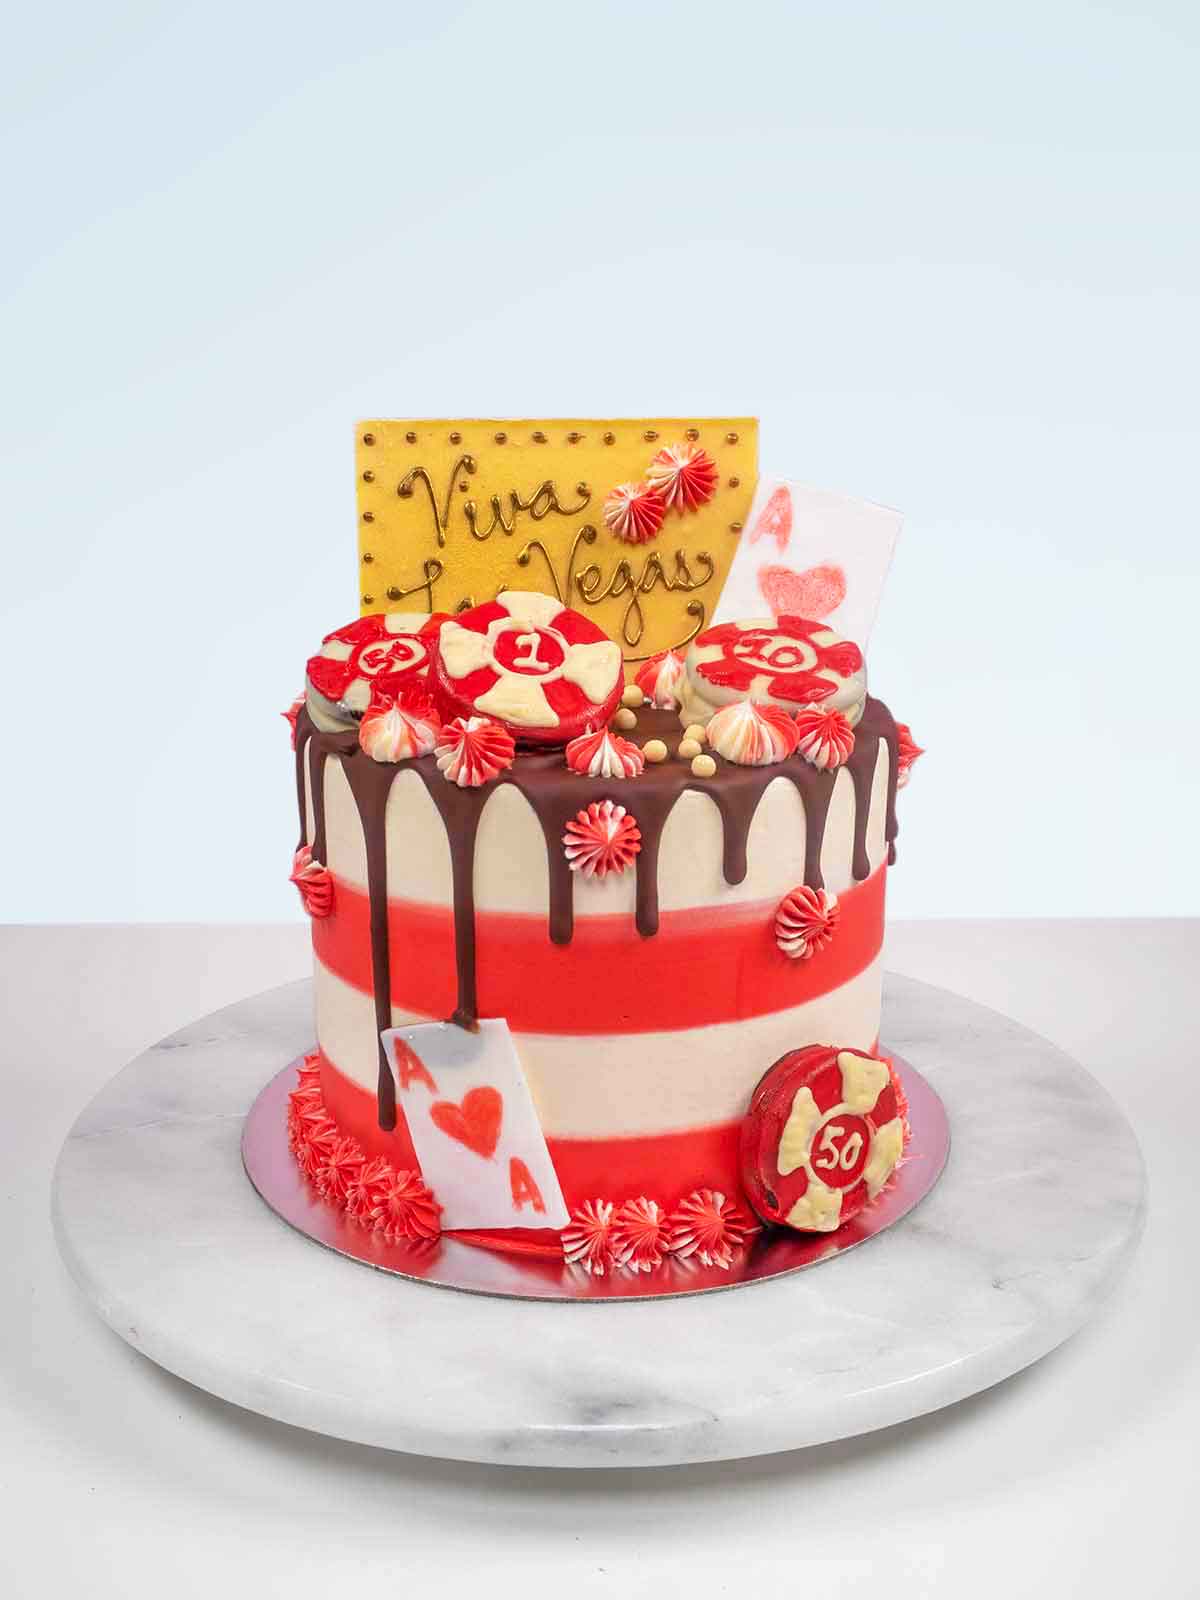 Gold drip cake idea! #cake #birthday #fifty | Chocolate and vanilla cake, Drip  cakes, Sweet 16 cakes